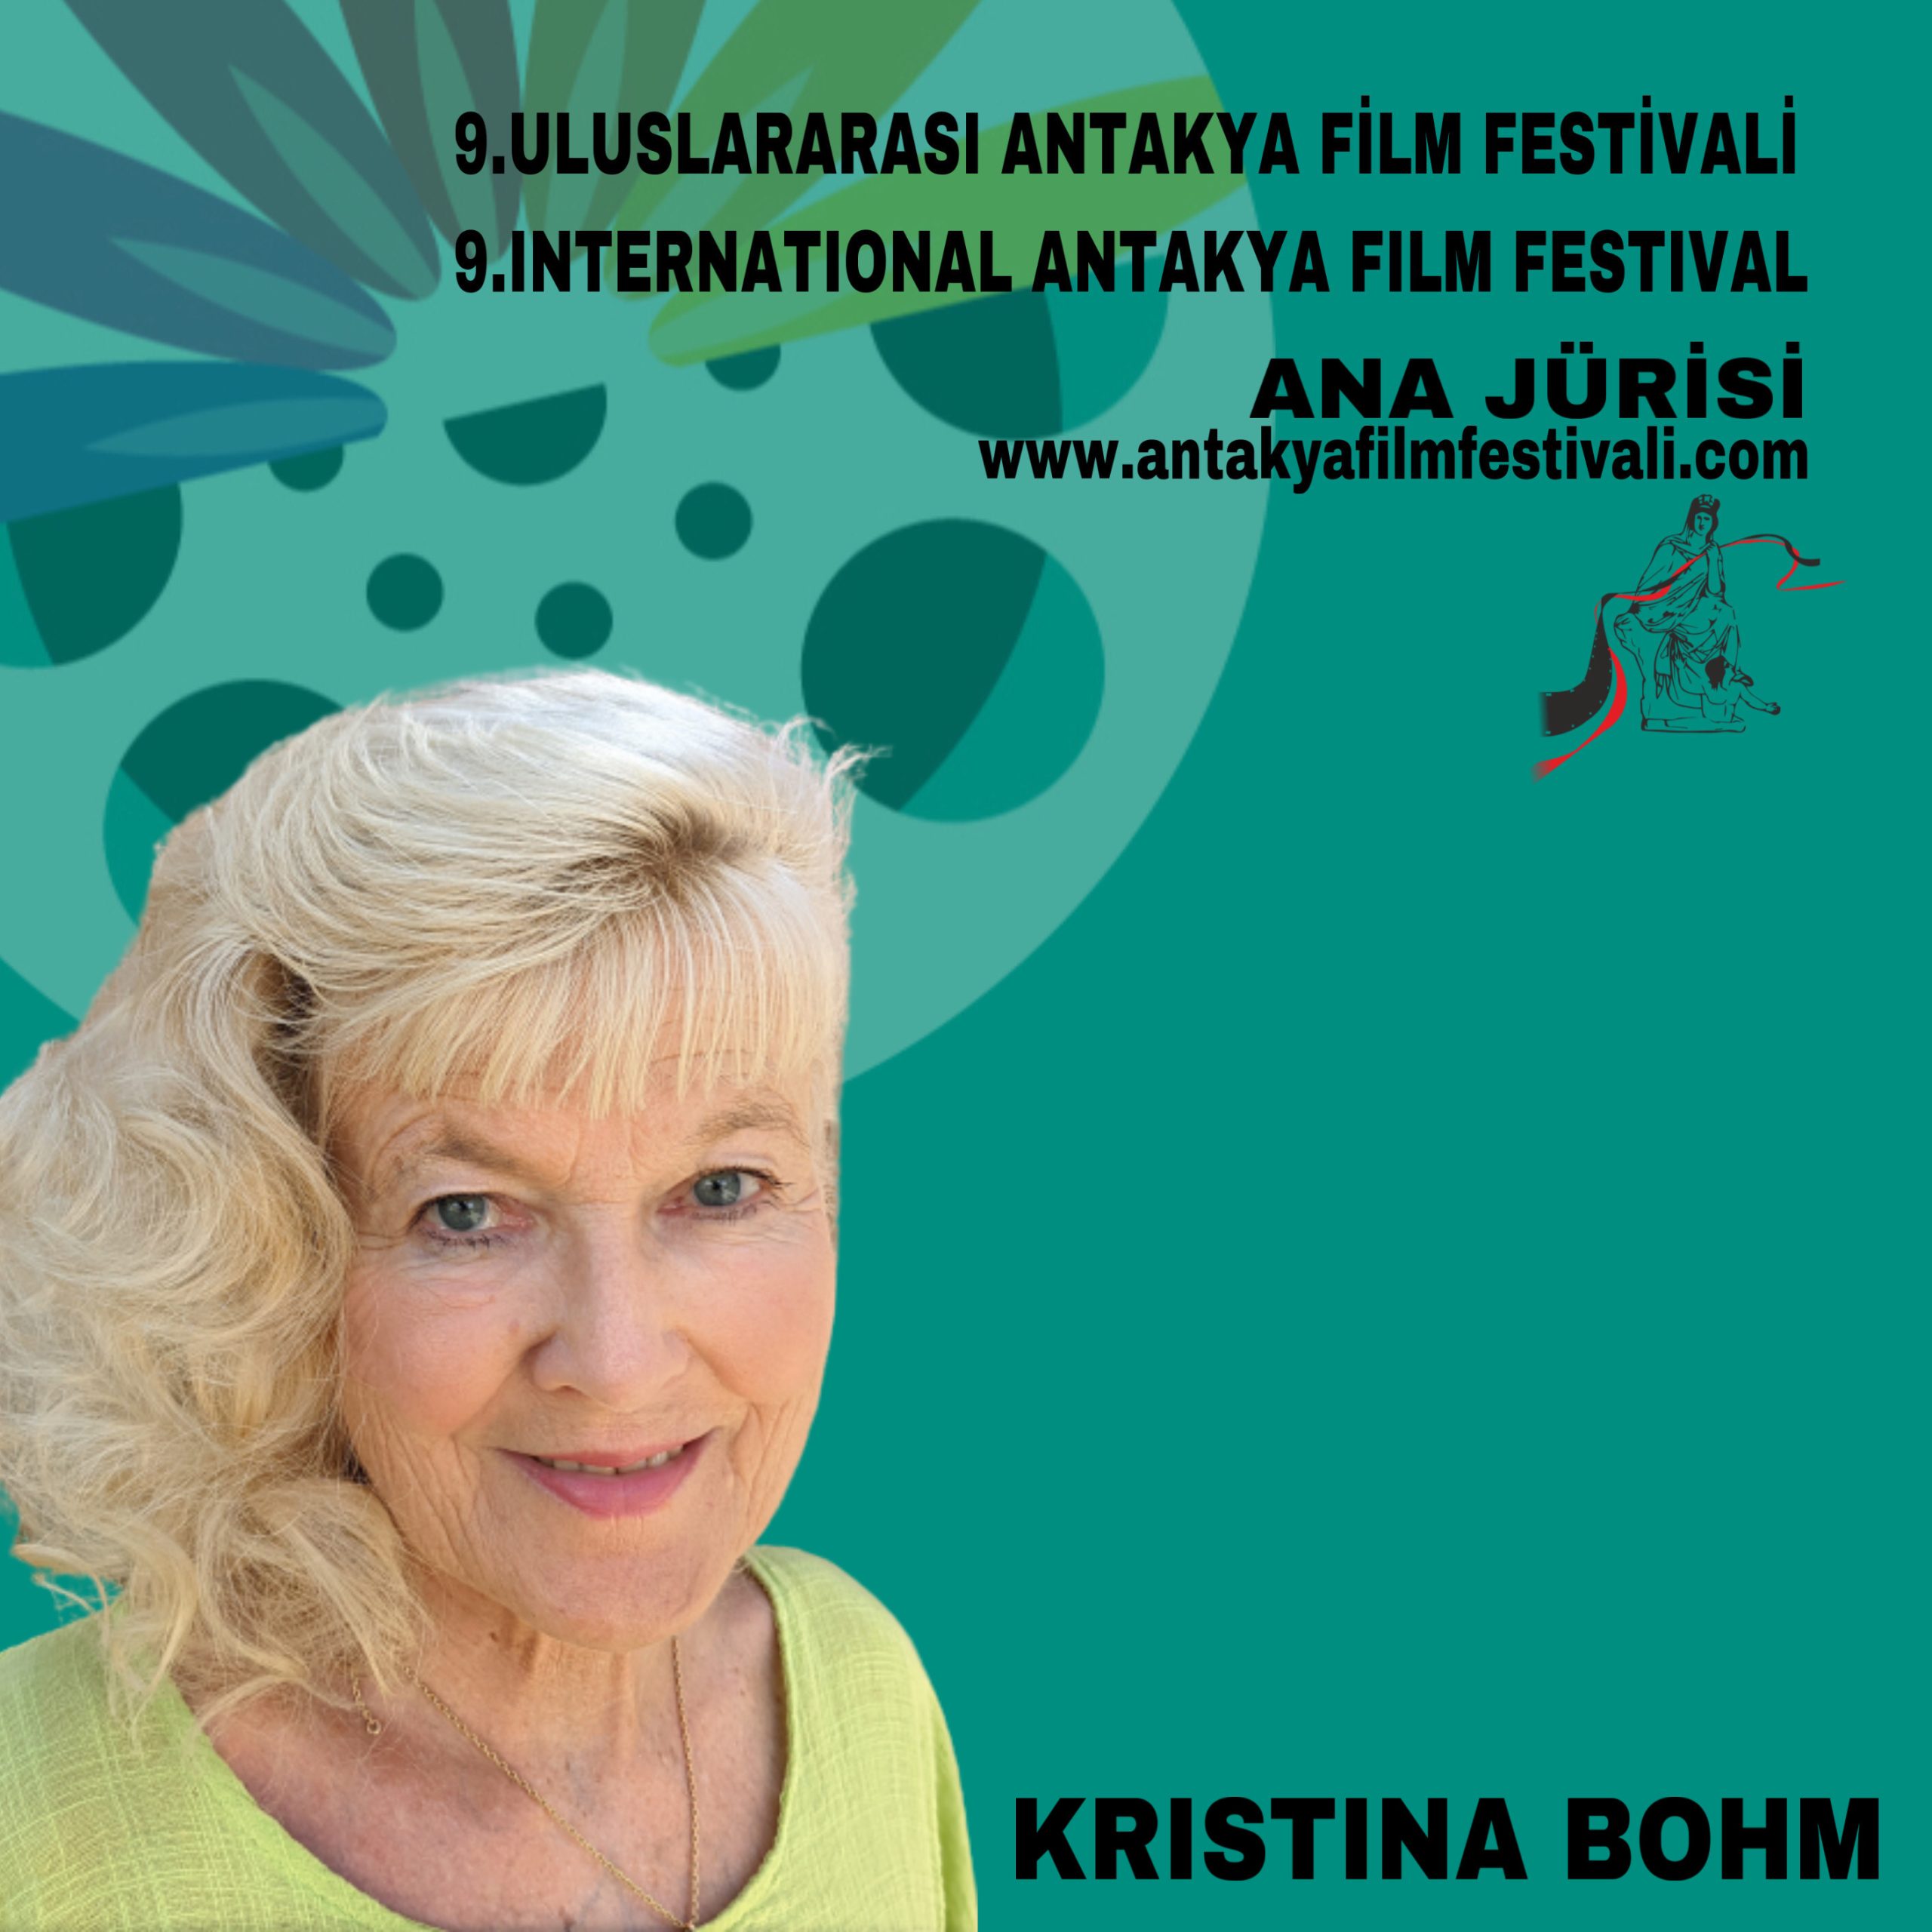 Kristina Böhm